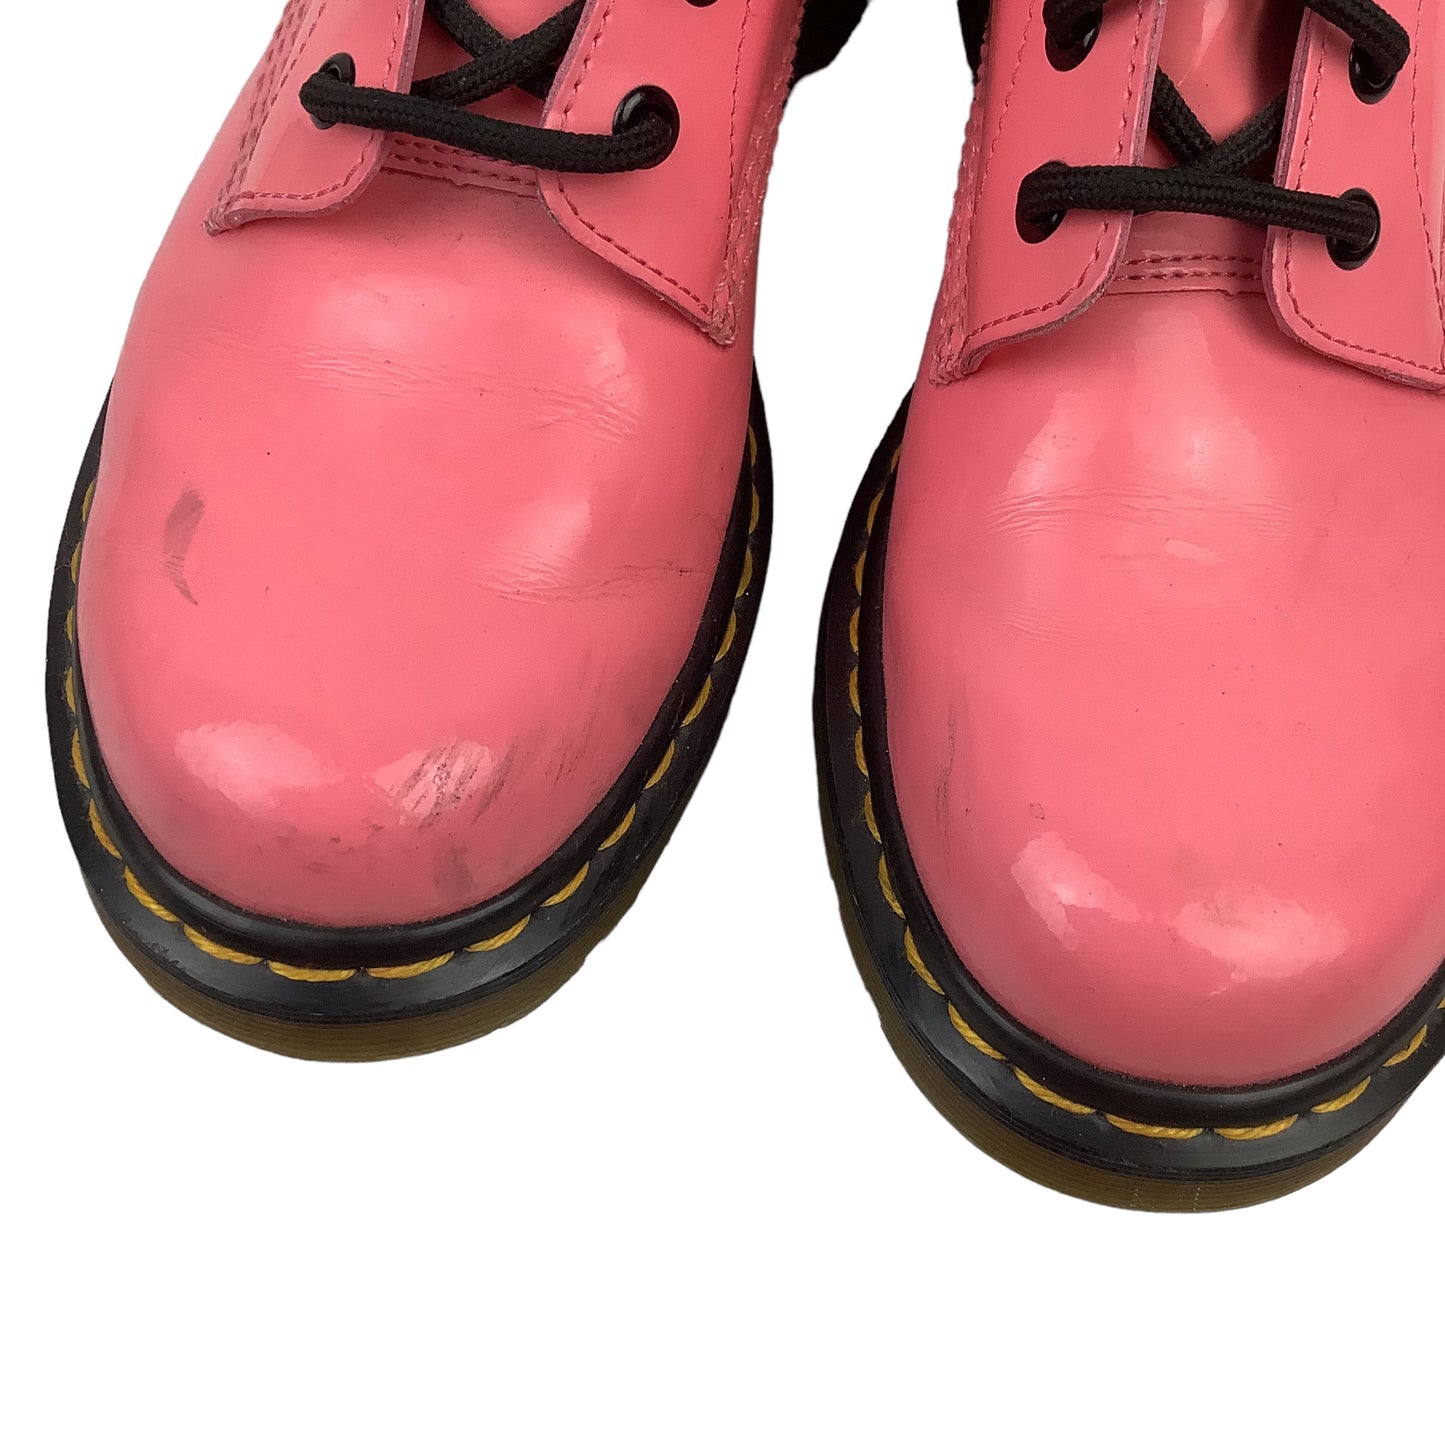 Boots Designer By Dr Martens  Size: 9